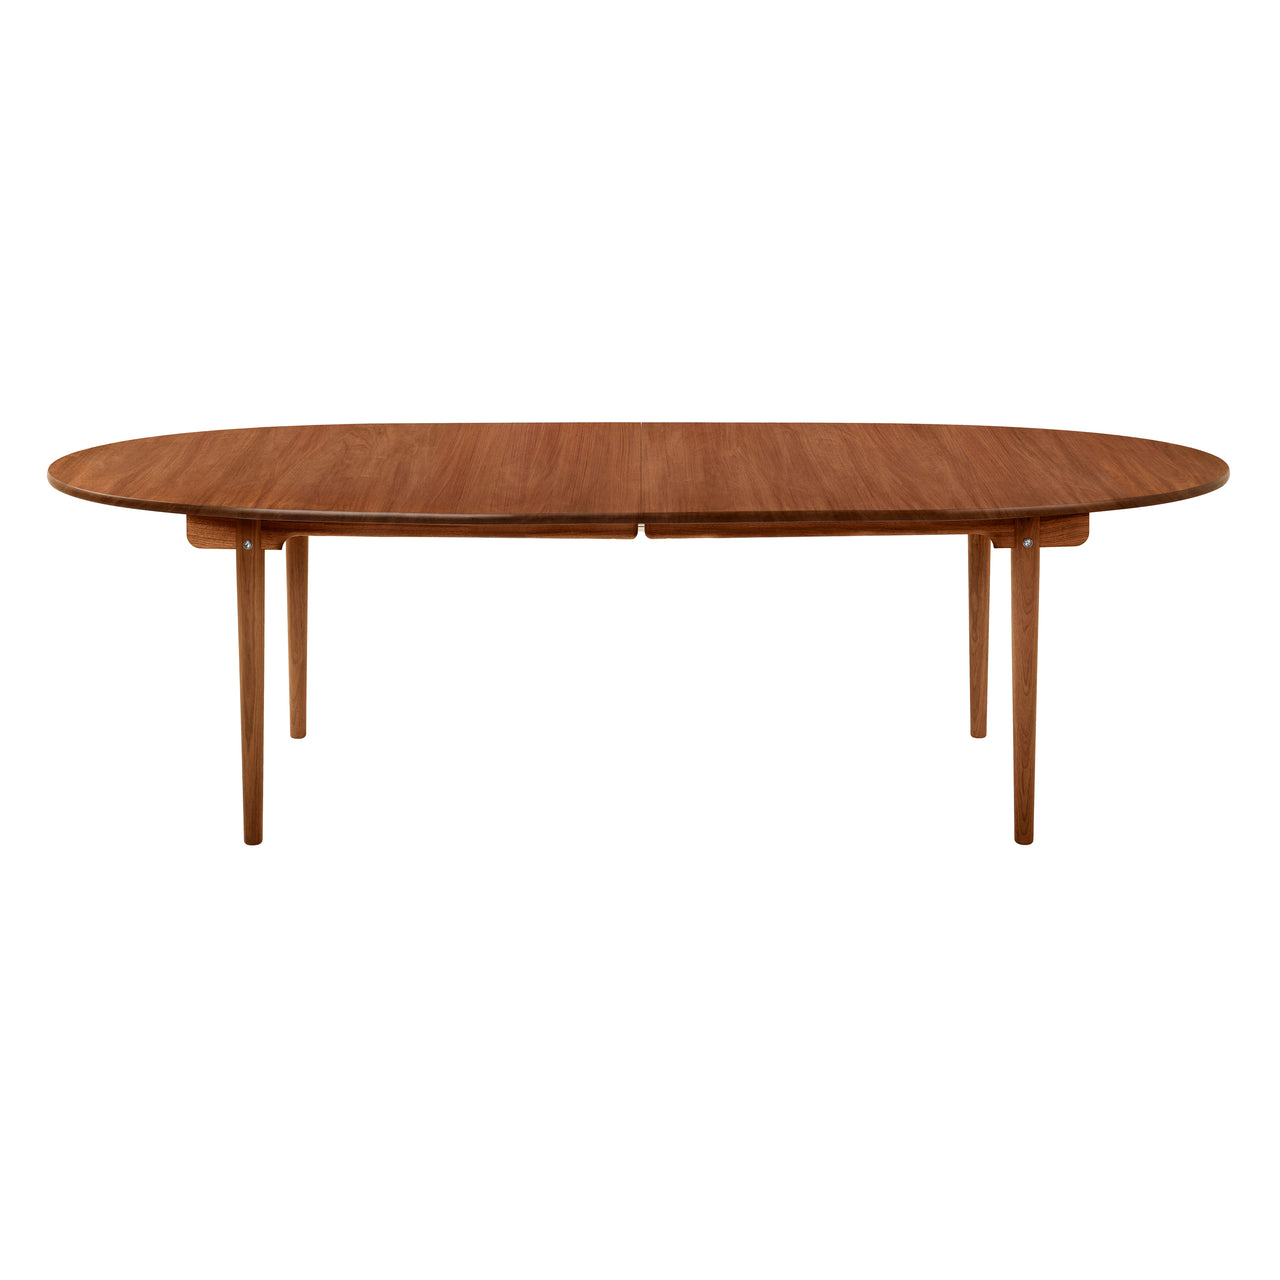 CH339 Dining Table: Oiled Mahogany